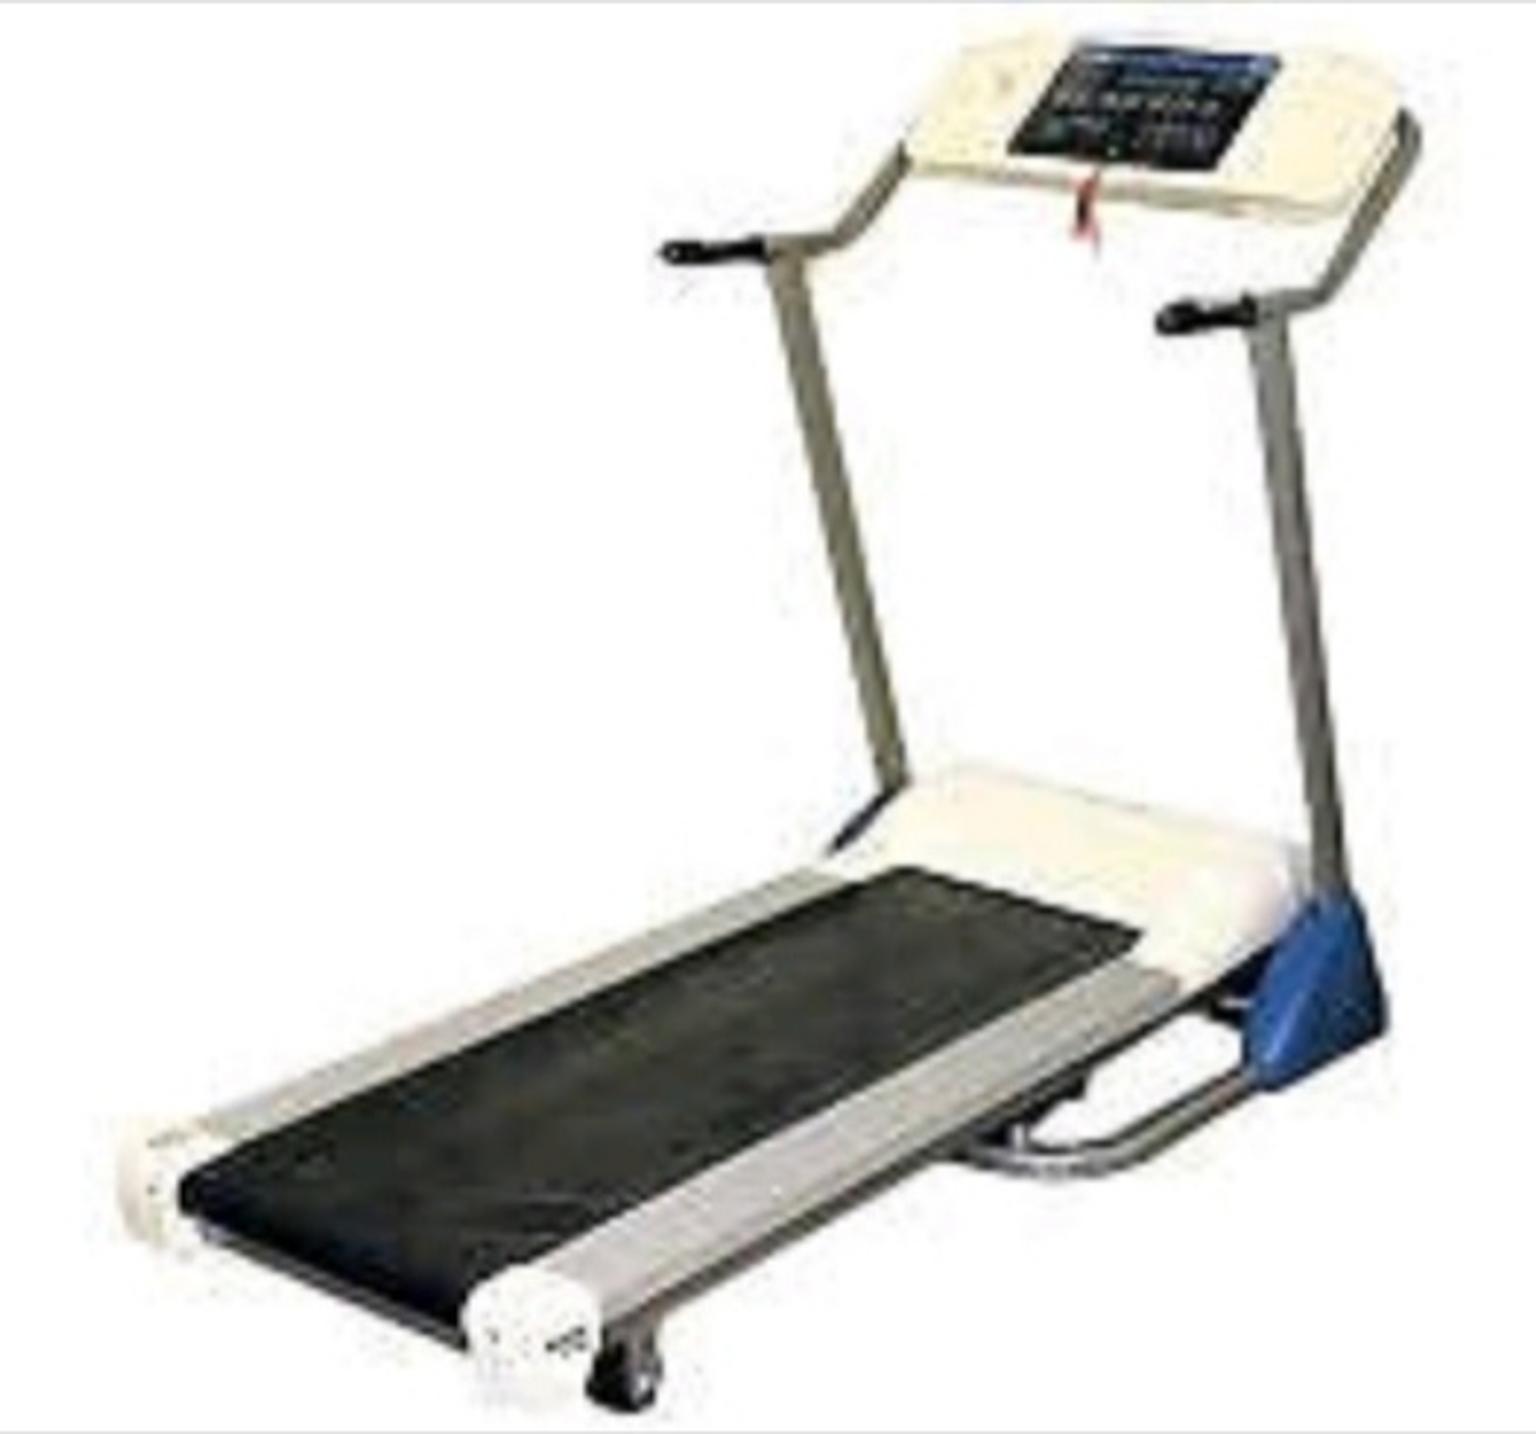 reebok edge treadmill